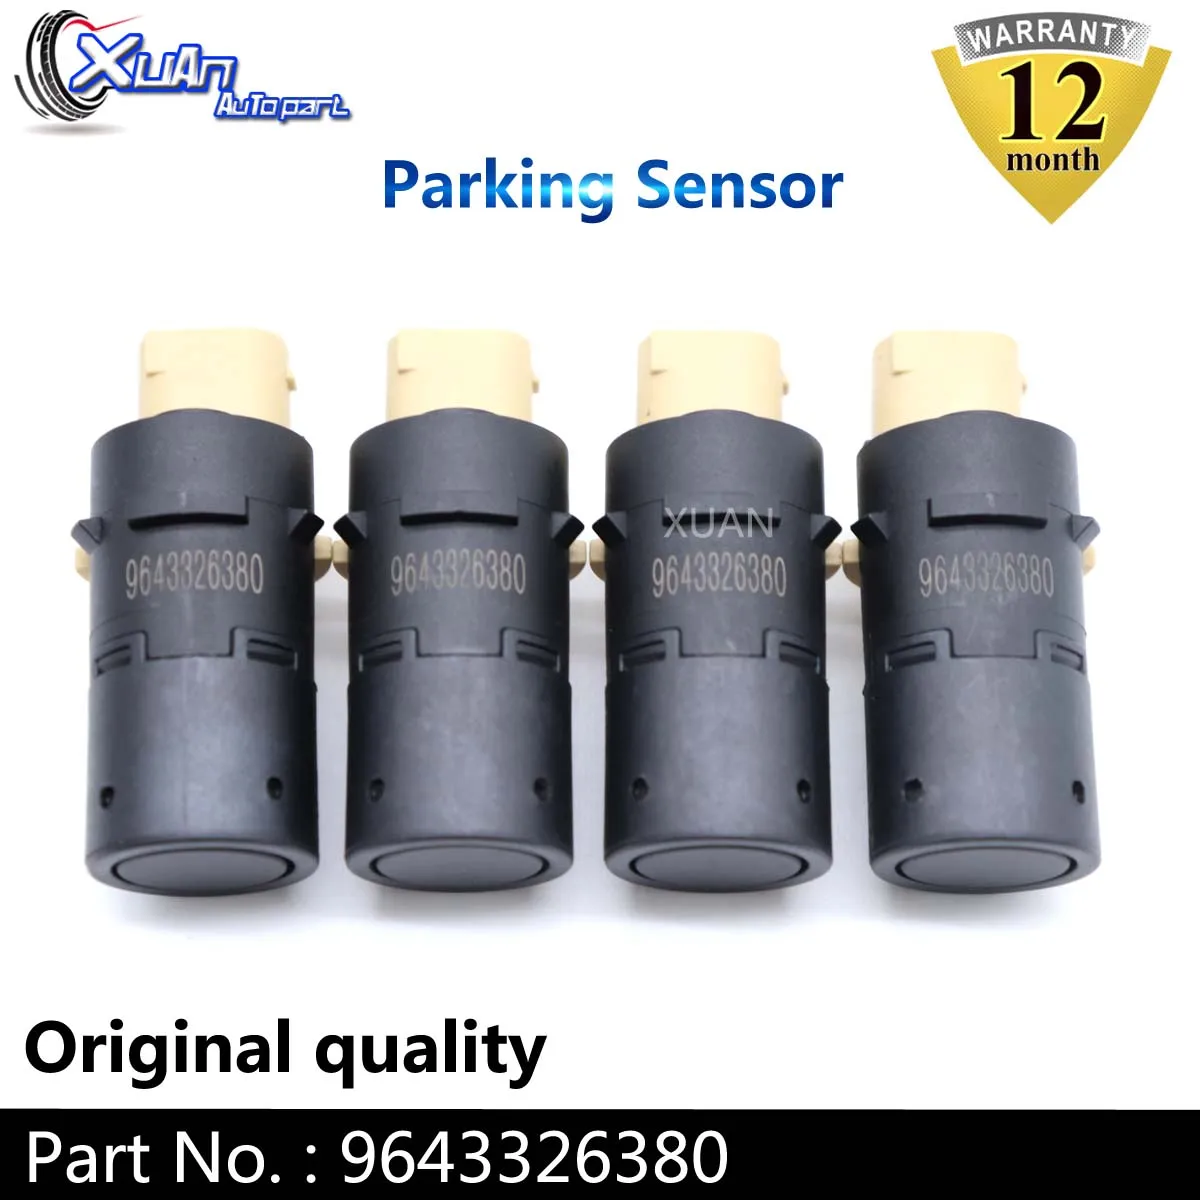 

XUAN 4pcs Car PDC Parking Sensor 9643326380 For Citroen C2 C3 C4 Peugeot 1007 307 Volvo S40 S60 S80 V50 V70 XC70 XC90 Renault